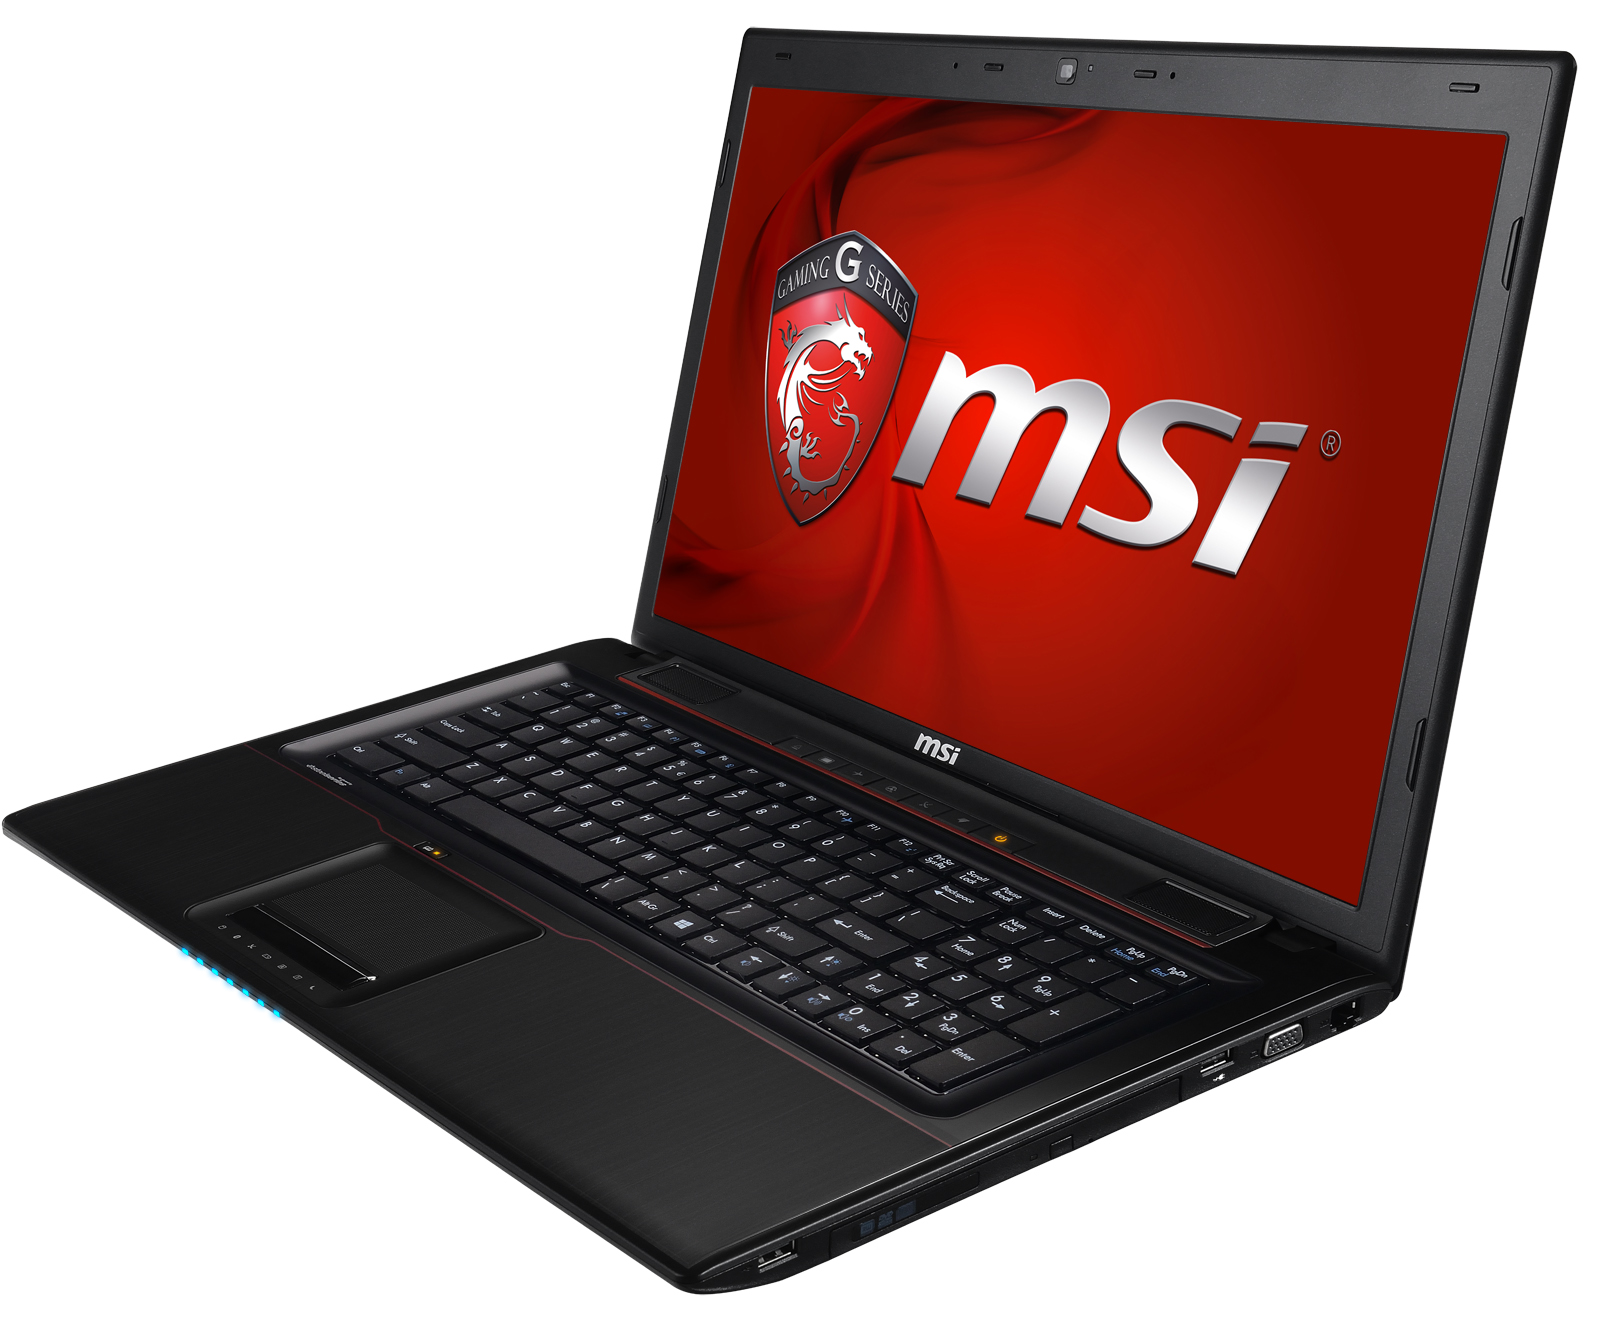 Ноутбук купить 8 gb. MSI ge70. Ноутбук MSI Apache ge70. Ноутбук MSI ge70 2pl Apache. MSI Notebook ge 70.